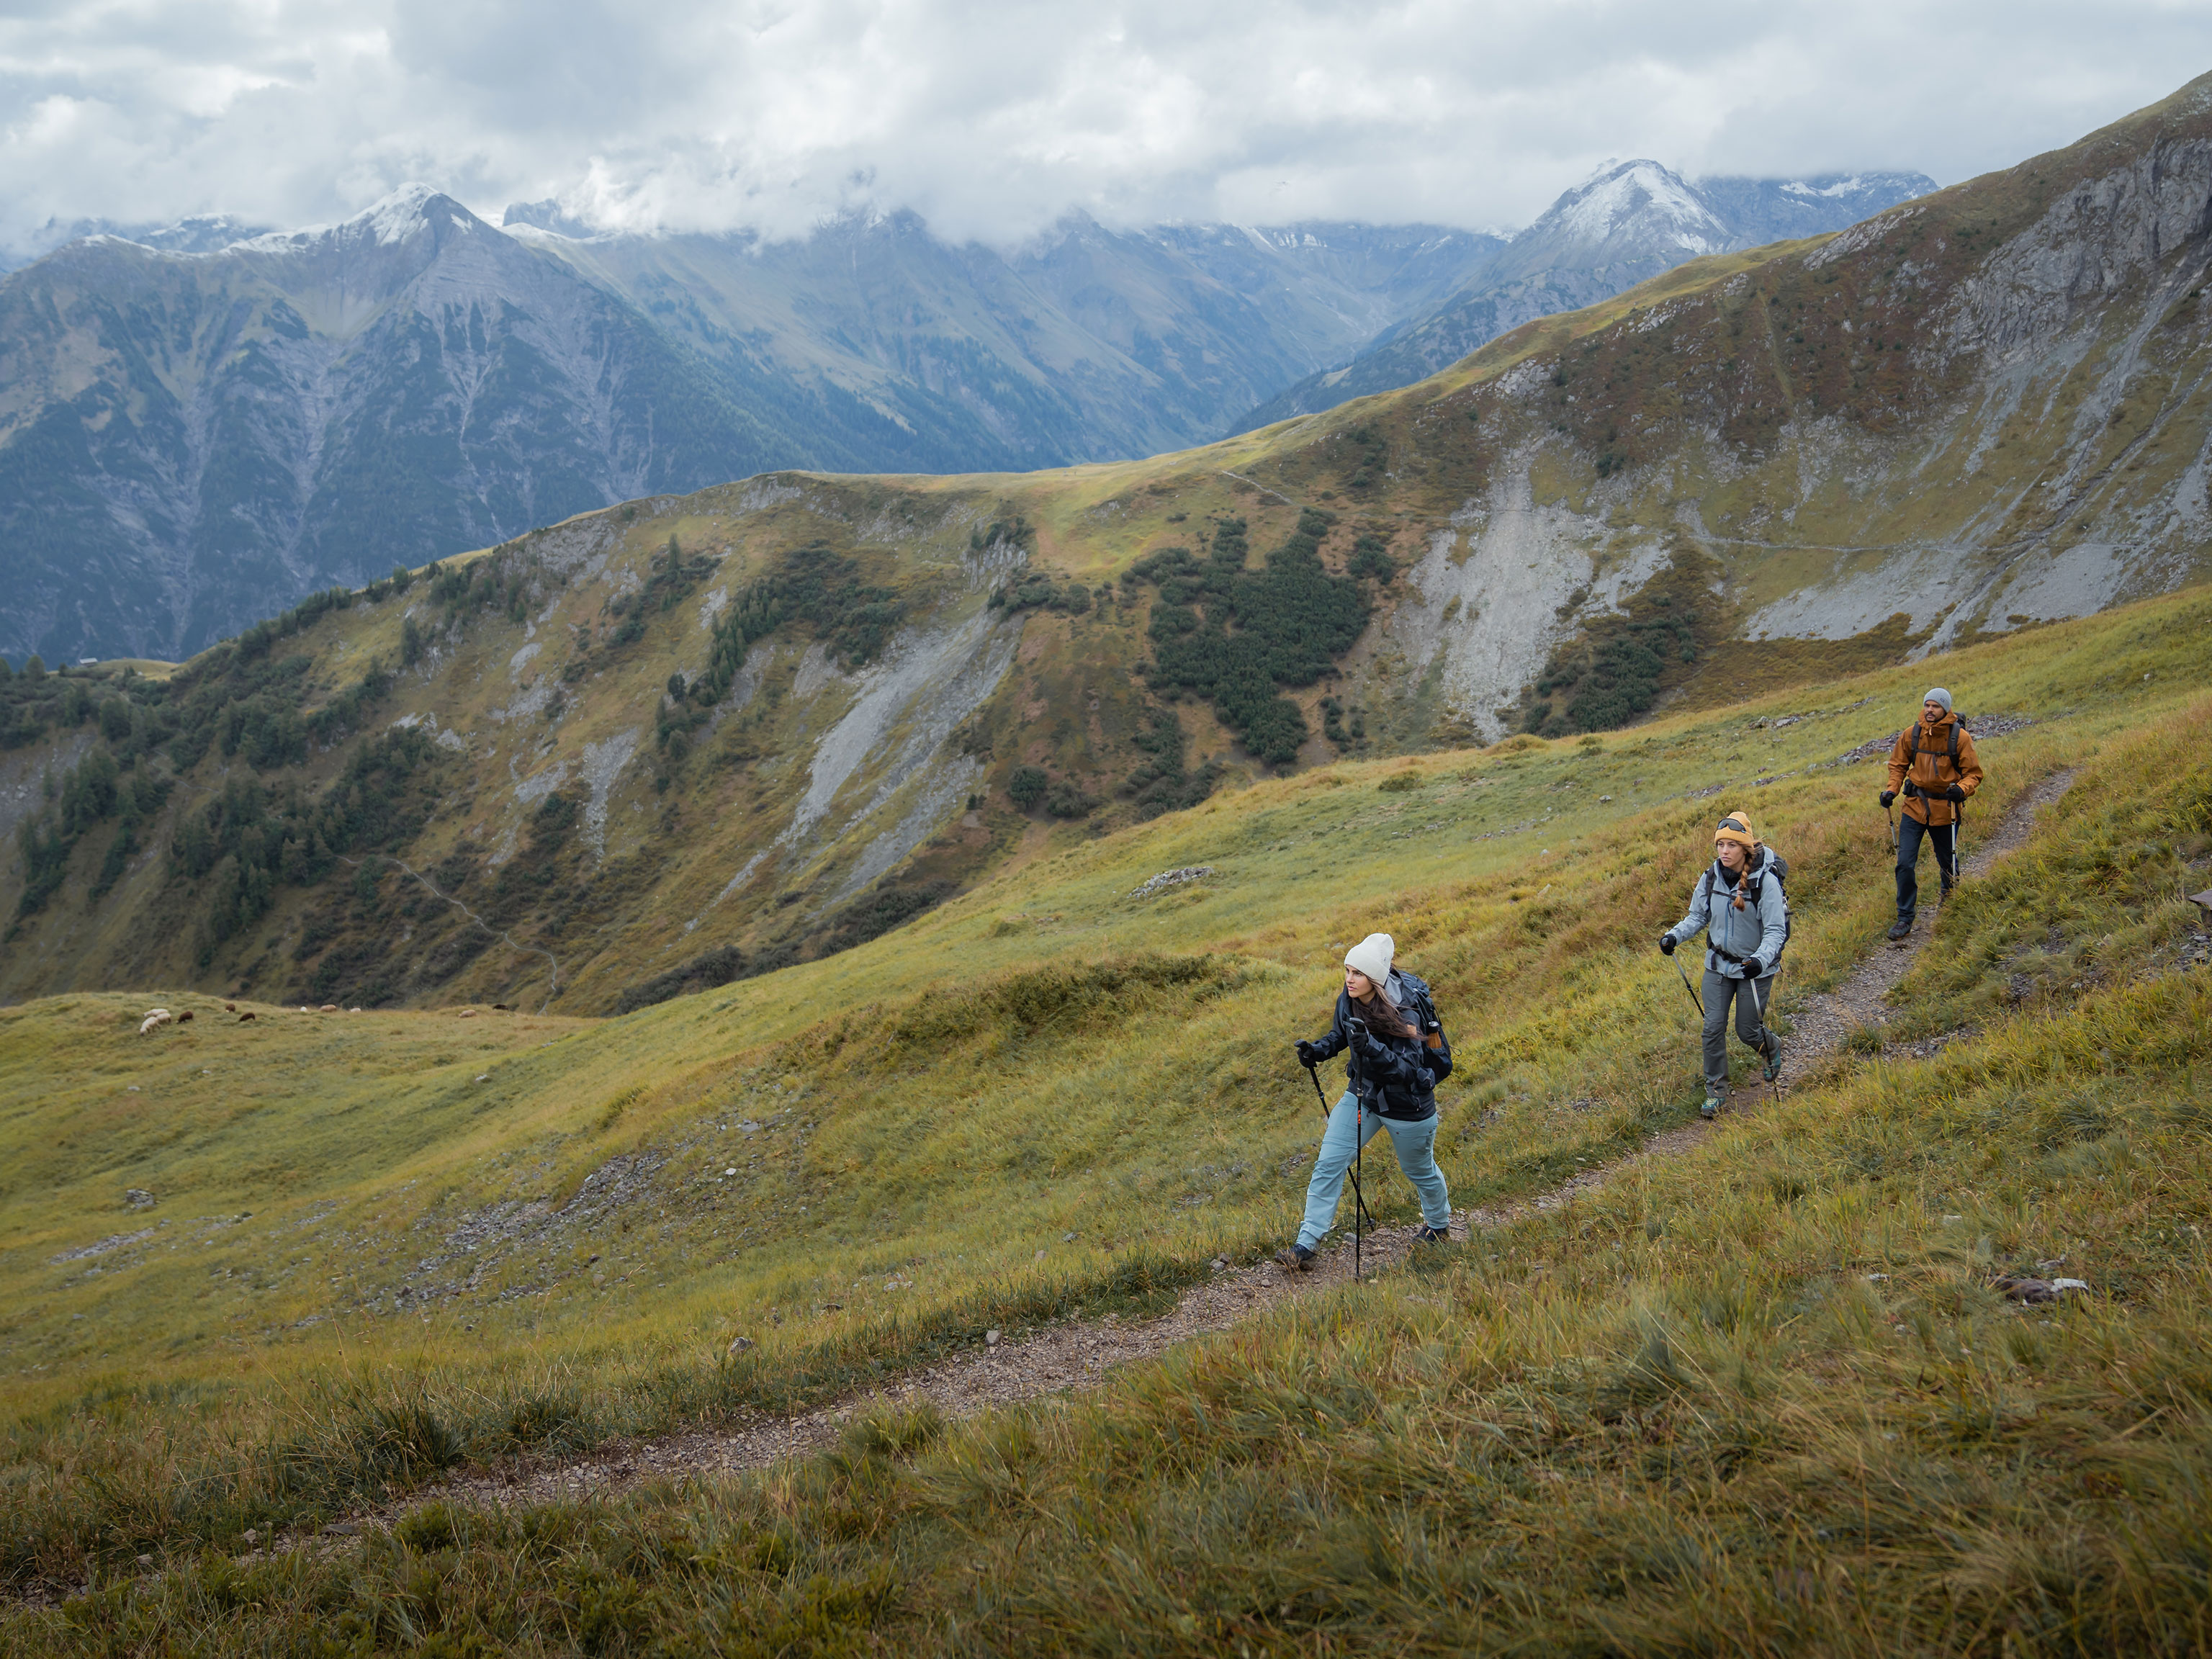 Three hikers walk along a mountain path